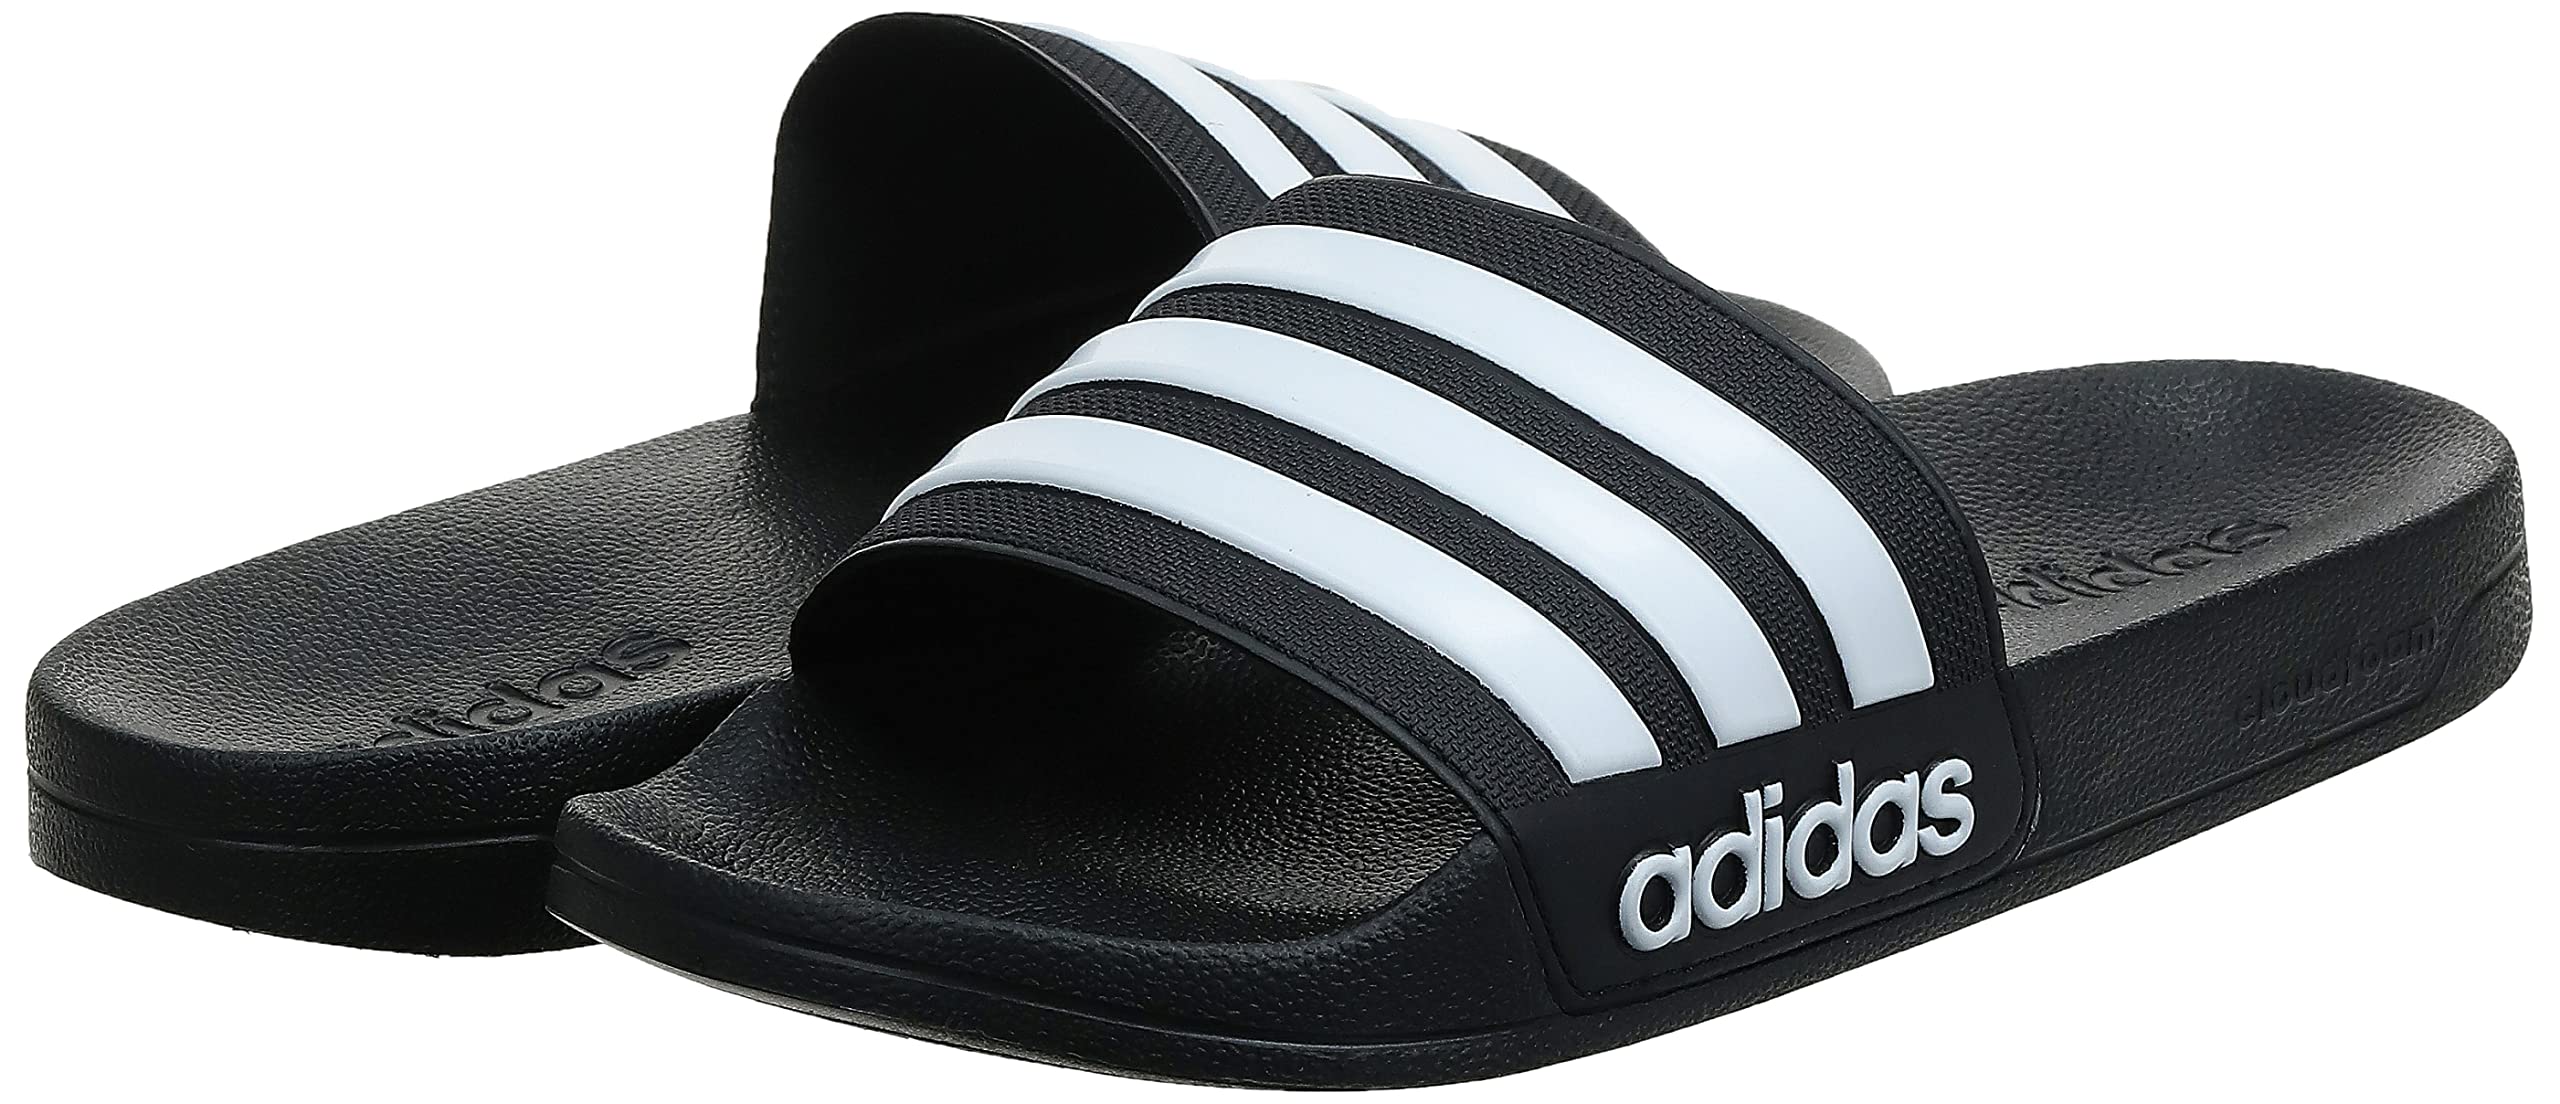 adidas Men's Flip Flop Beach & Pool Shoes, 36.5 EU